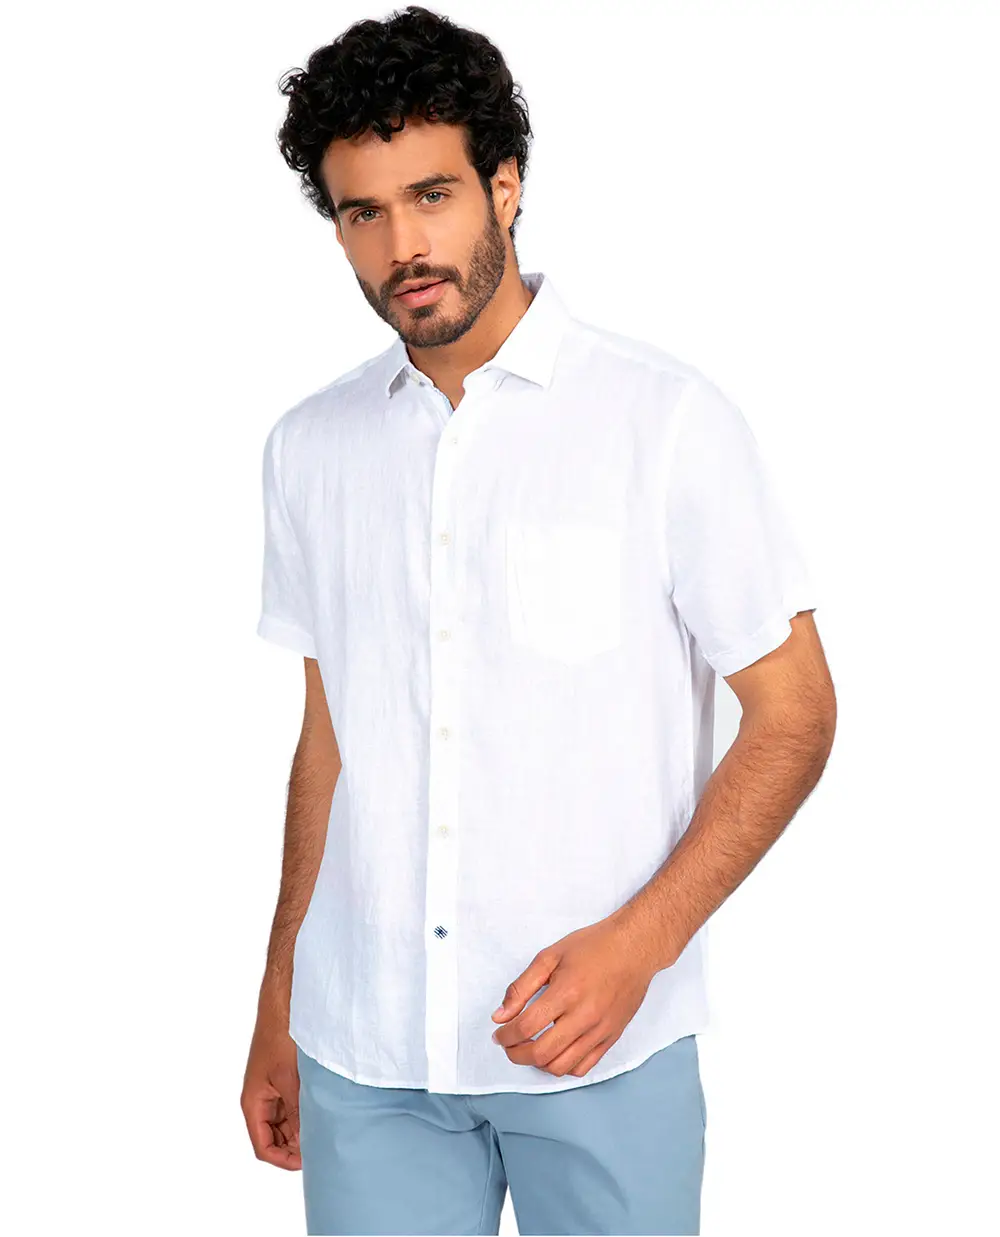 camisas blancas para hombres 4